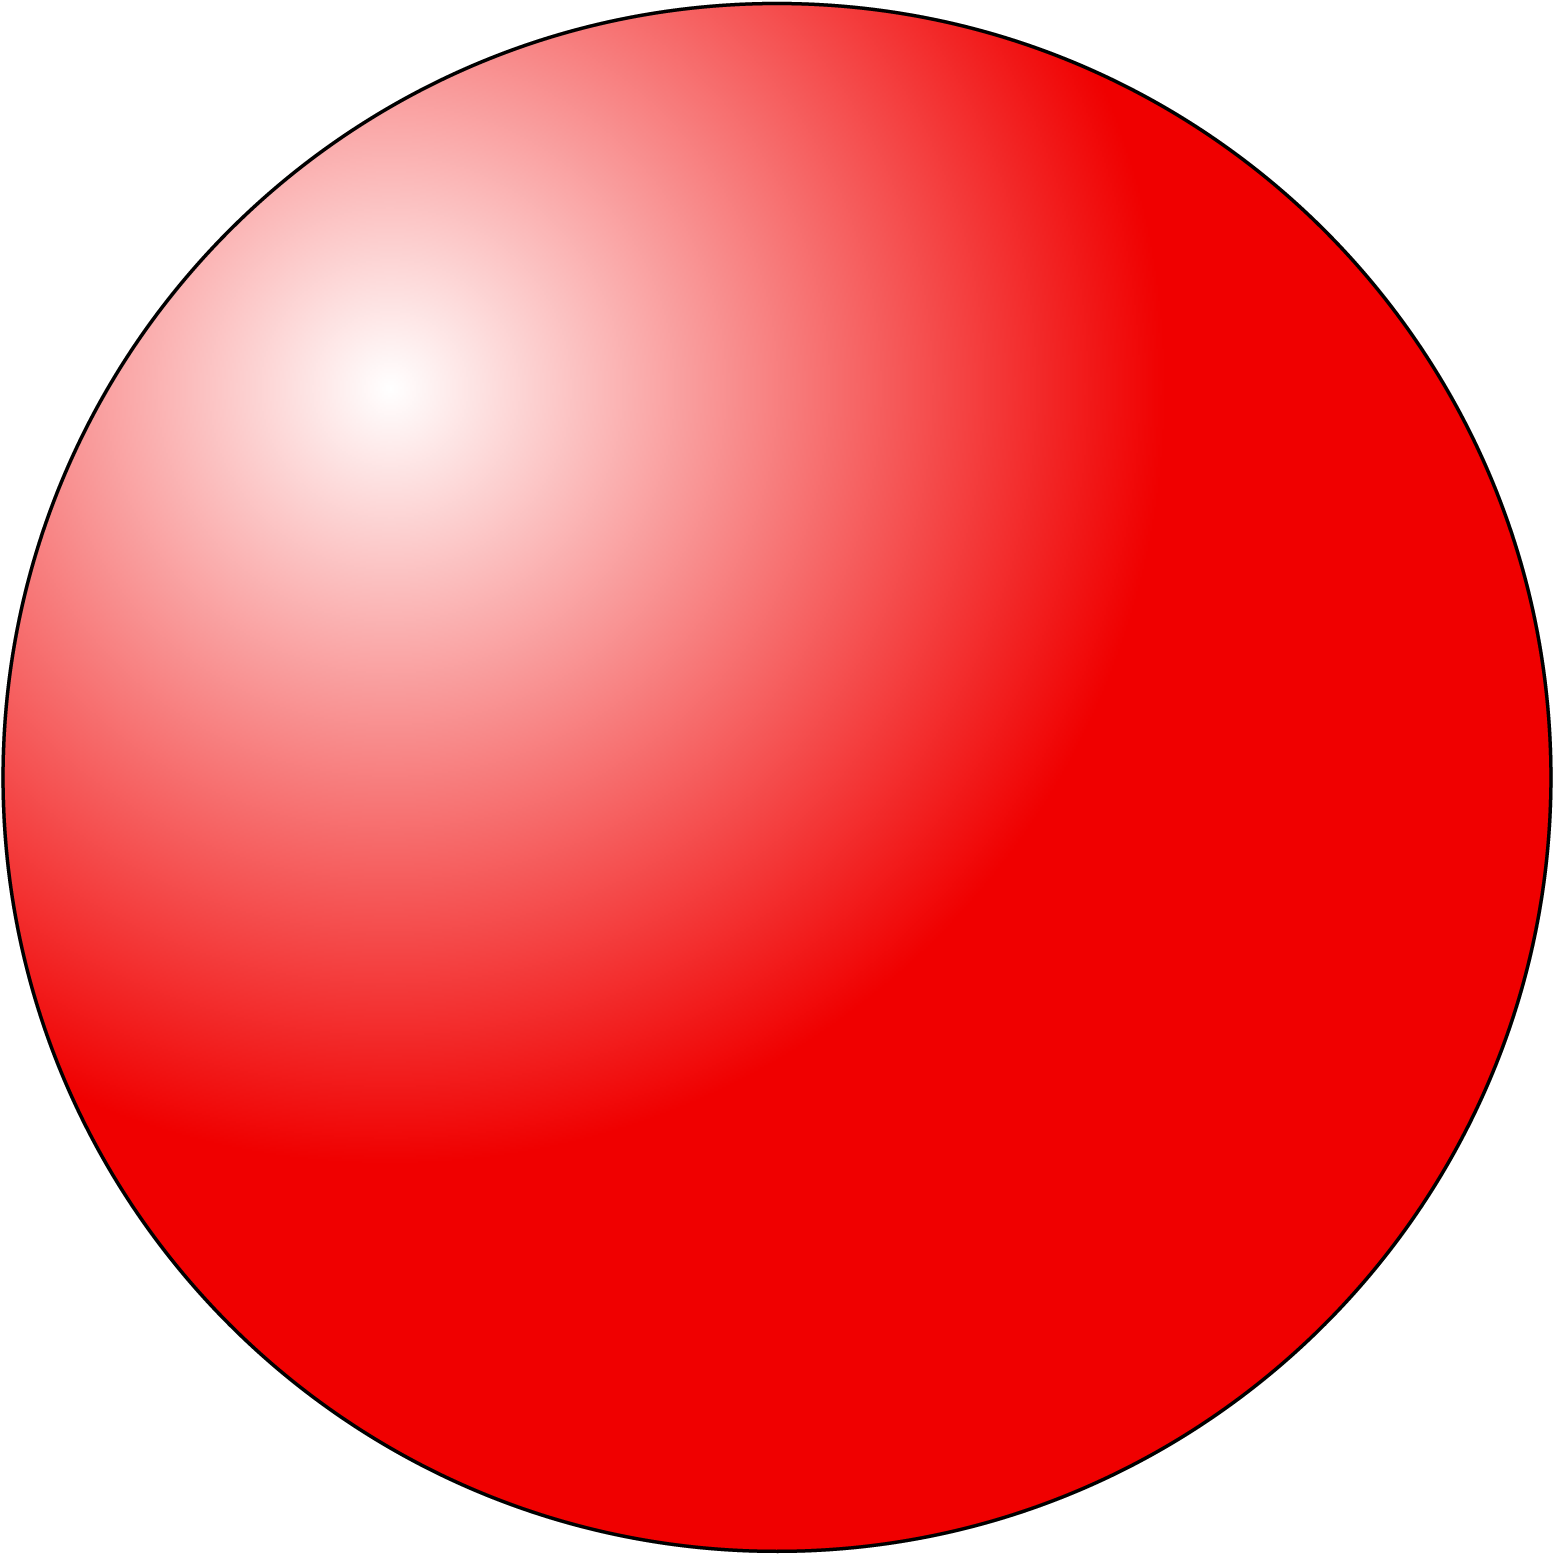 Red Gradient Sphere Illustration PNG image